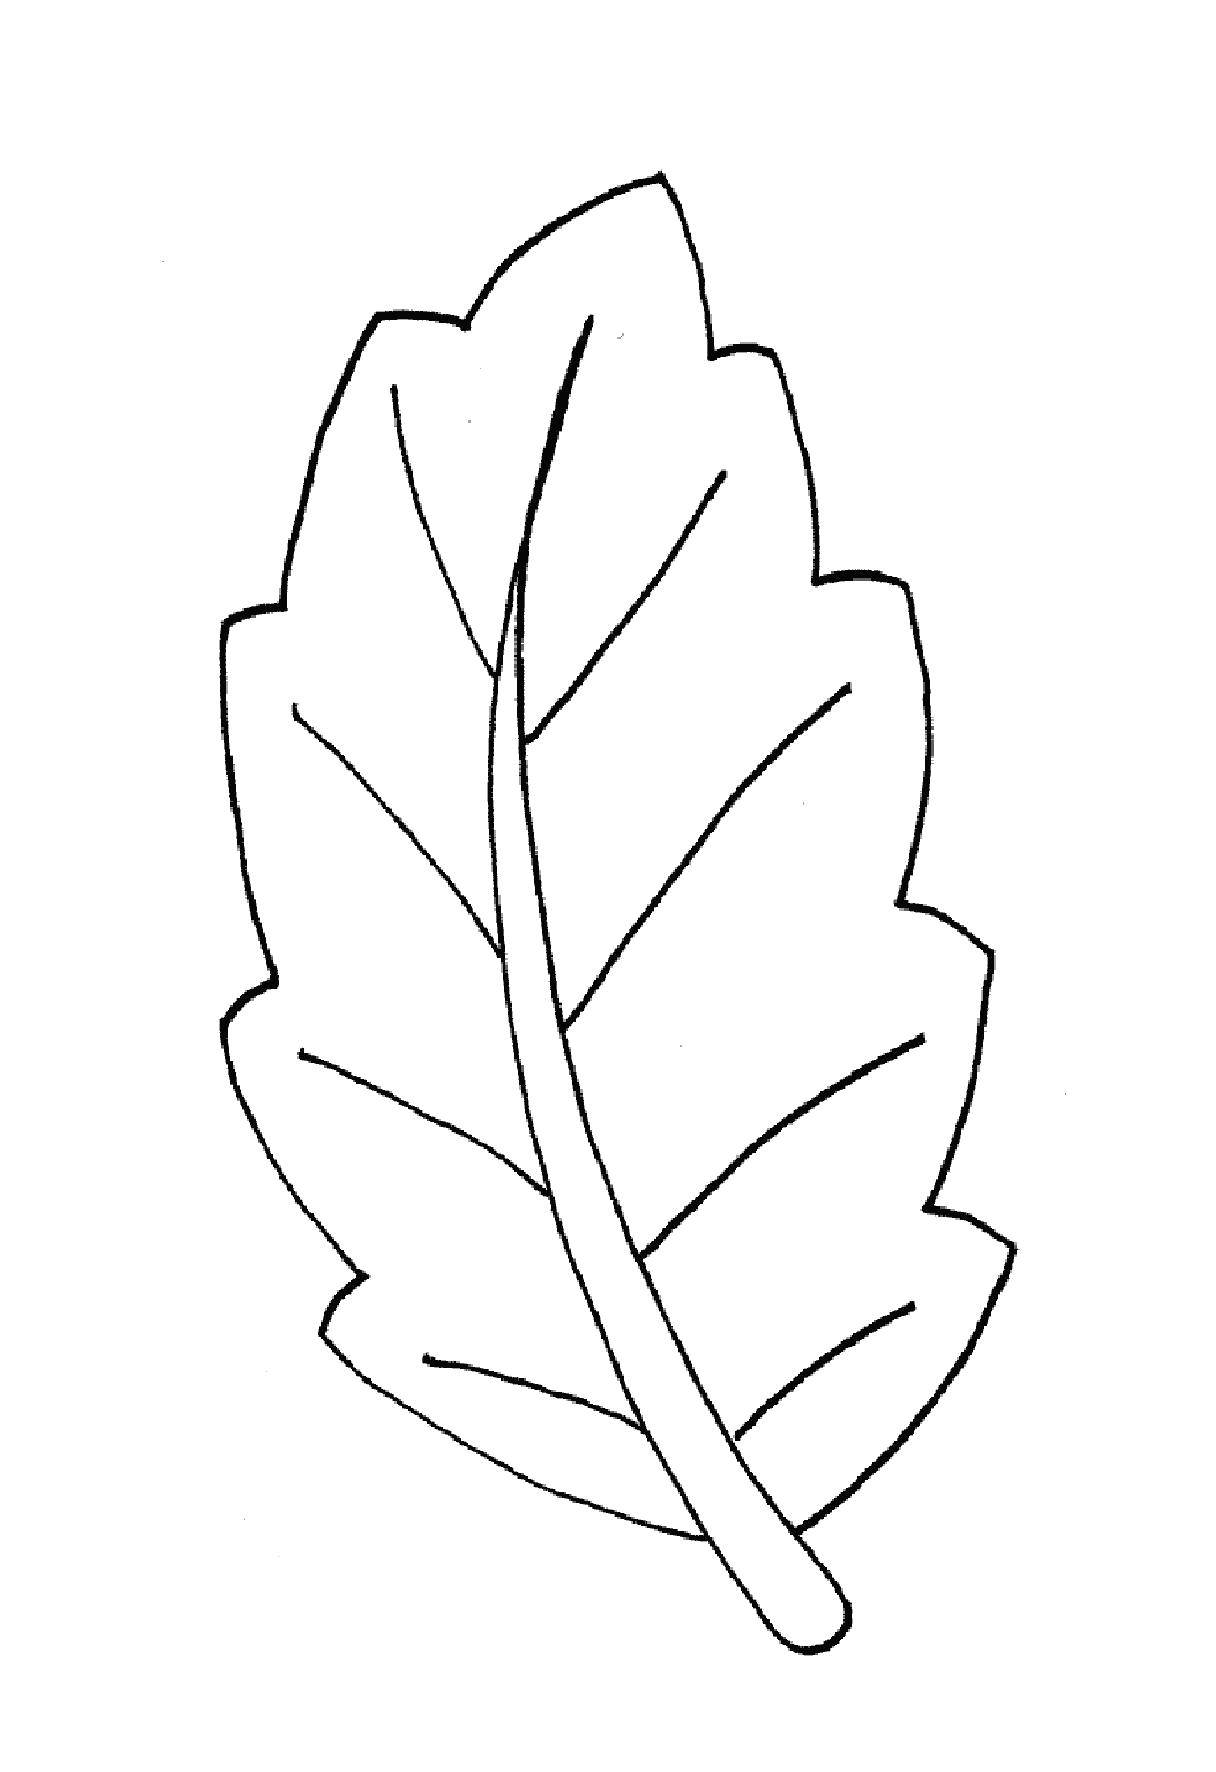 Coloring Leaf. Category leaves. Tags:  Leaf, tree.